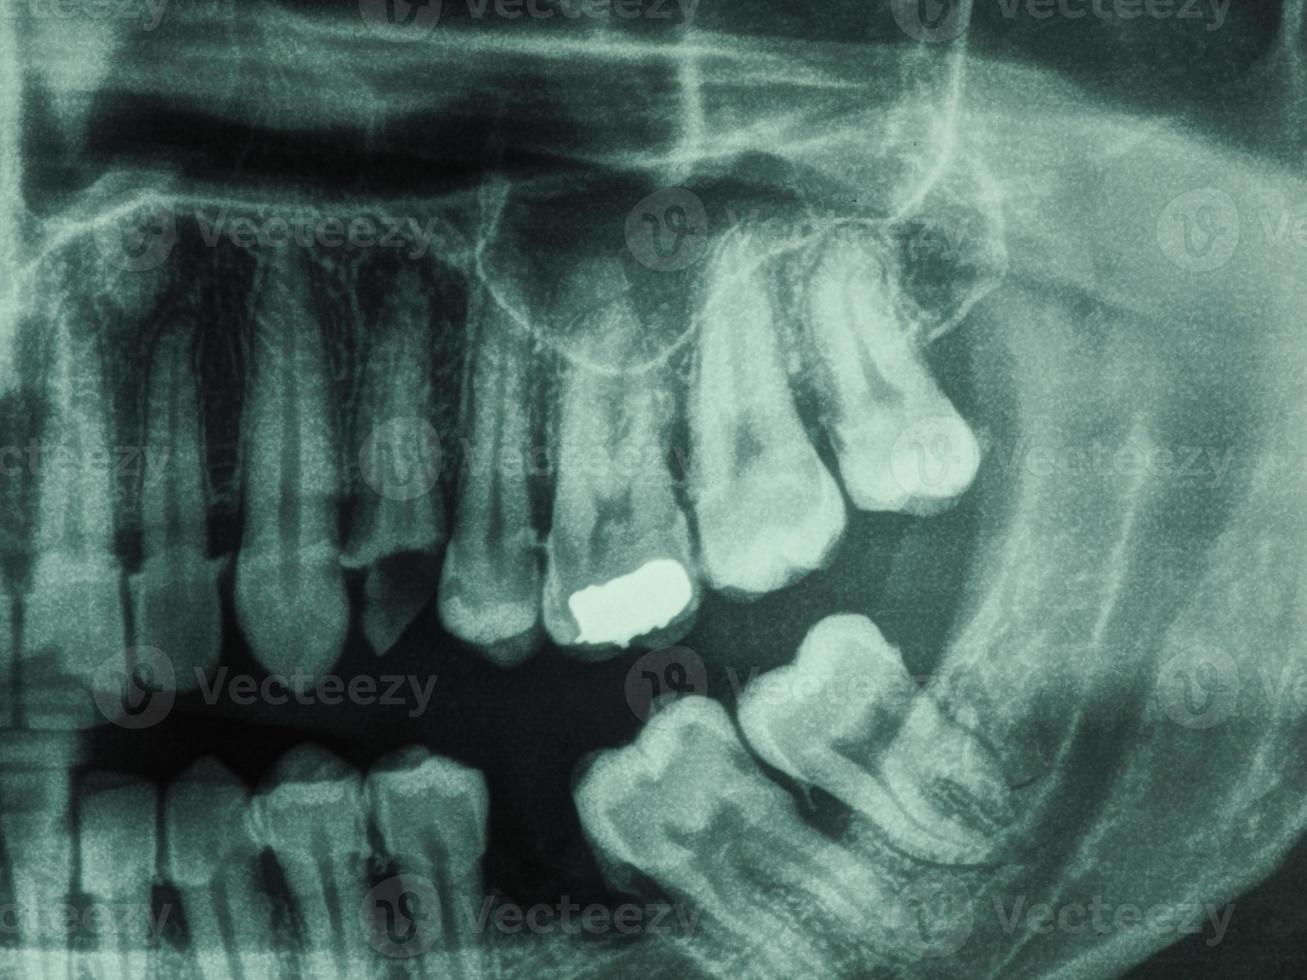 raggi x dei denti umani foto